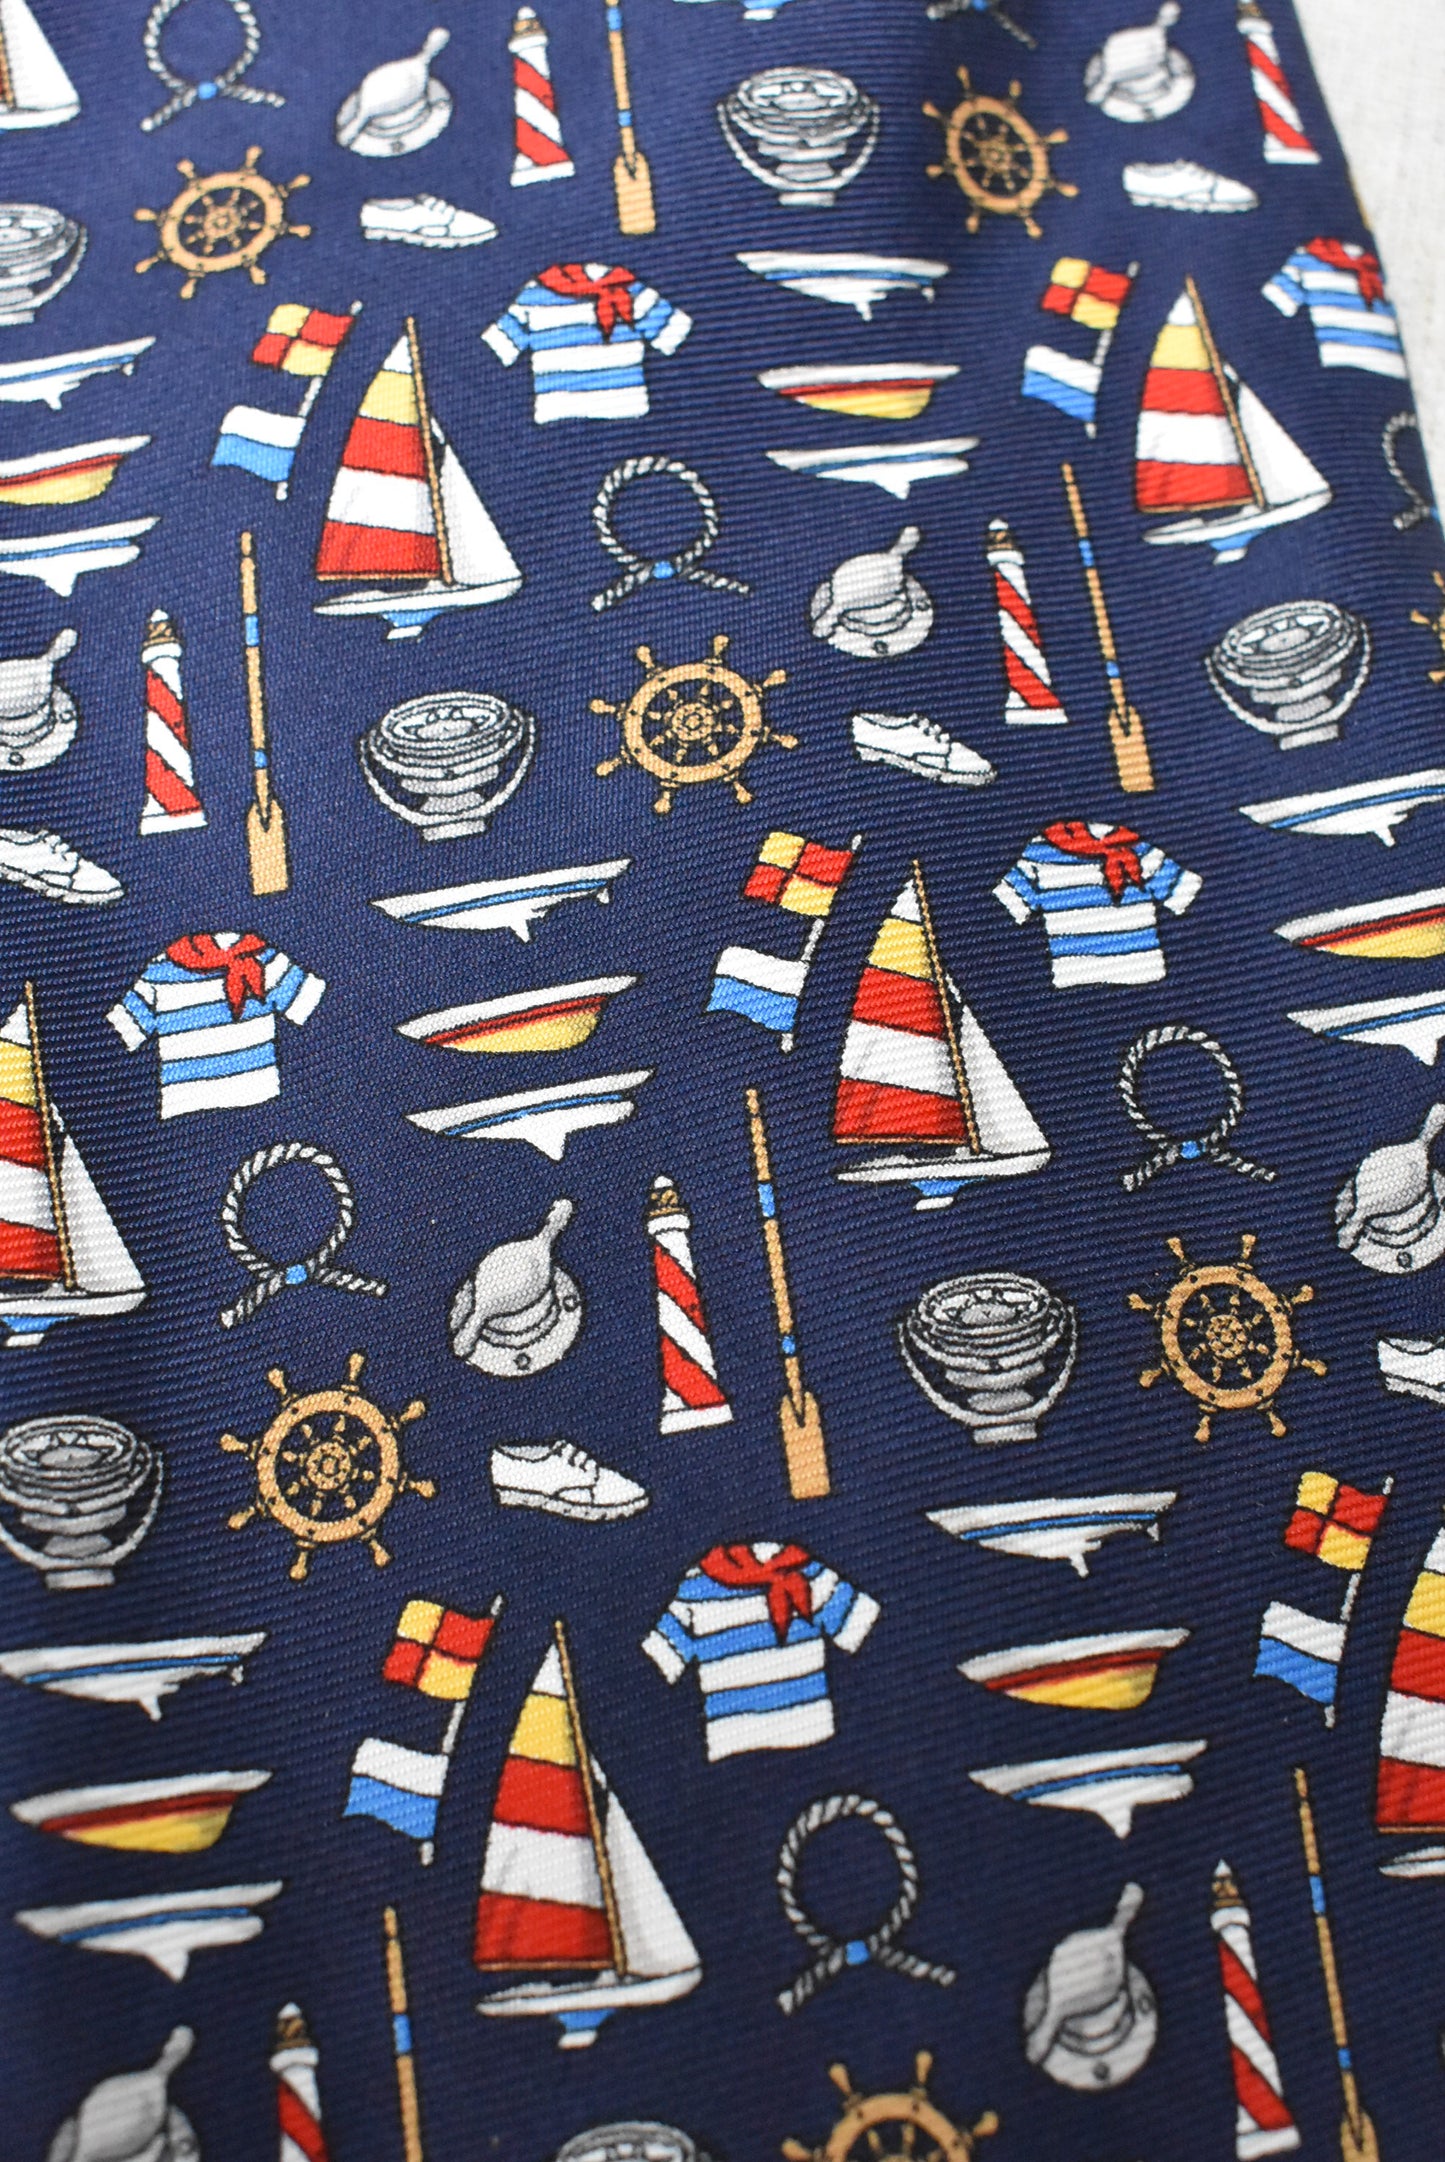 Beaufort pure silk nautical themed tie, NWT